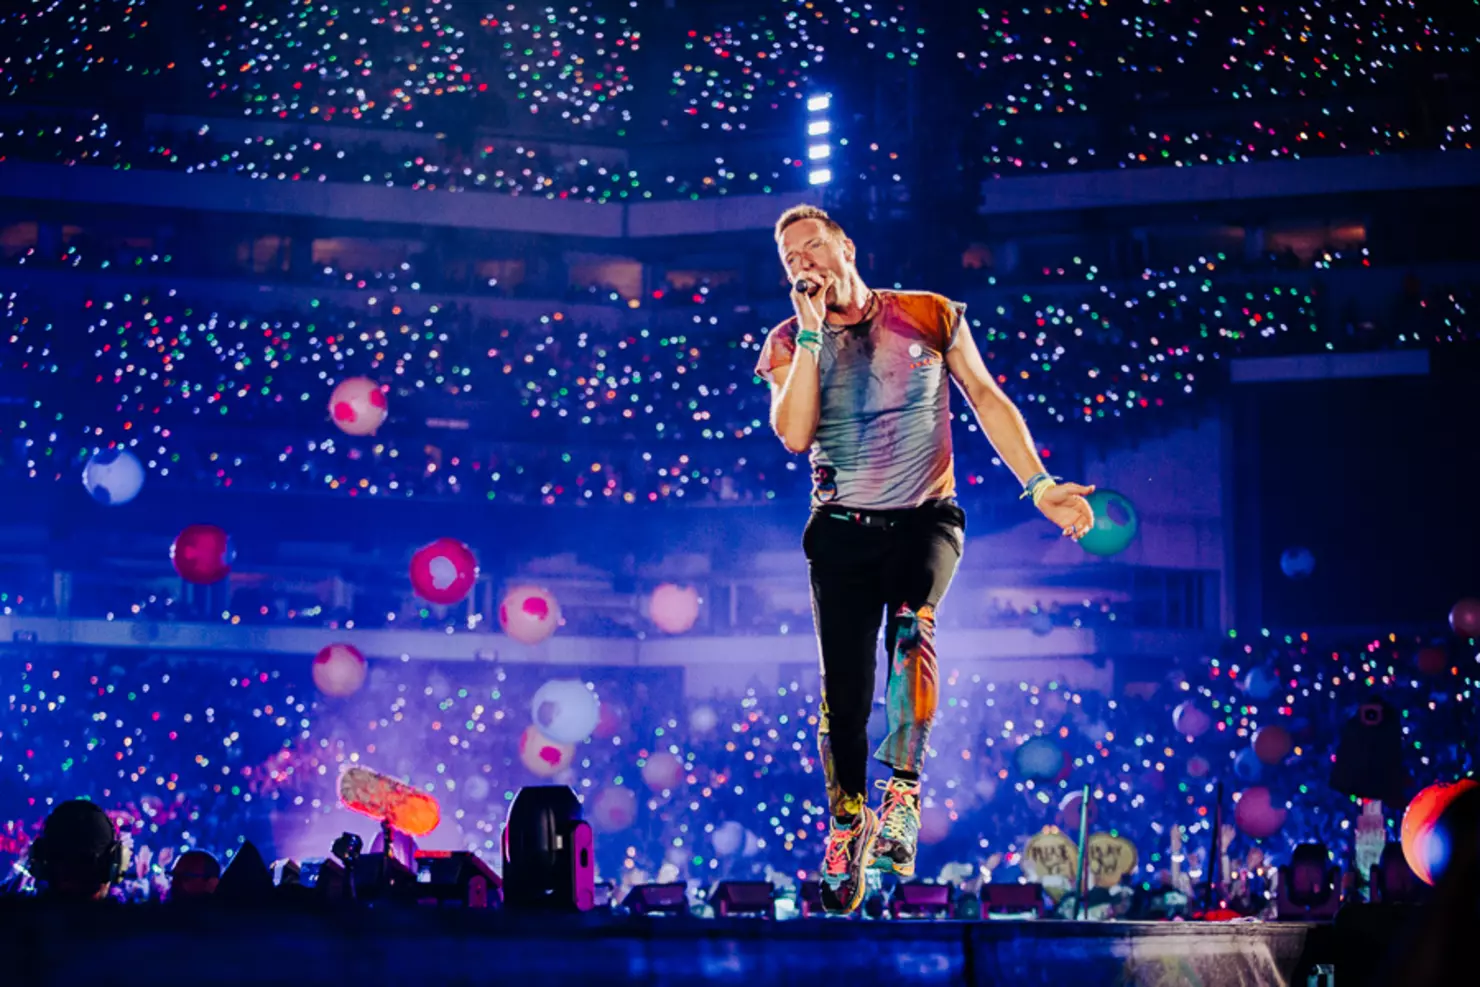 Jelang Konser Coldplay, Jam Operasional Transjakarta dan MRT Diperpanjang